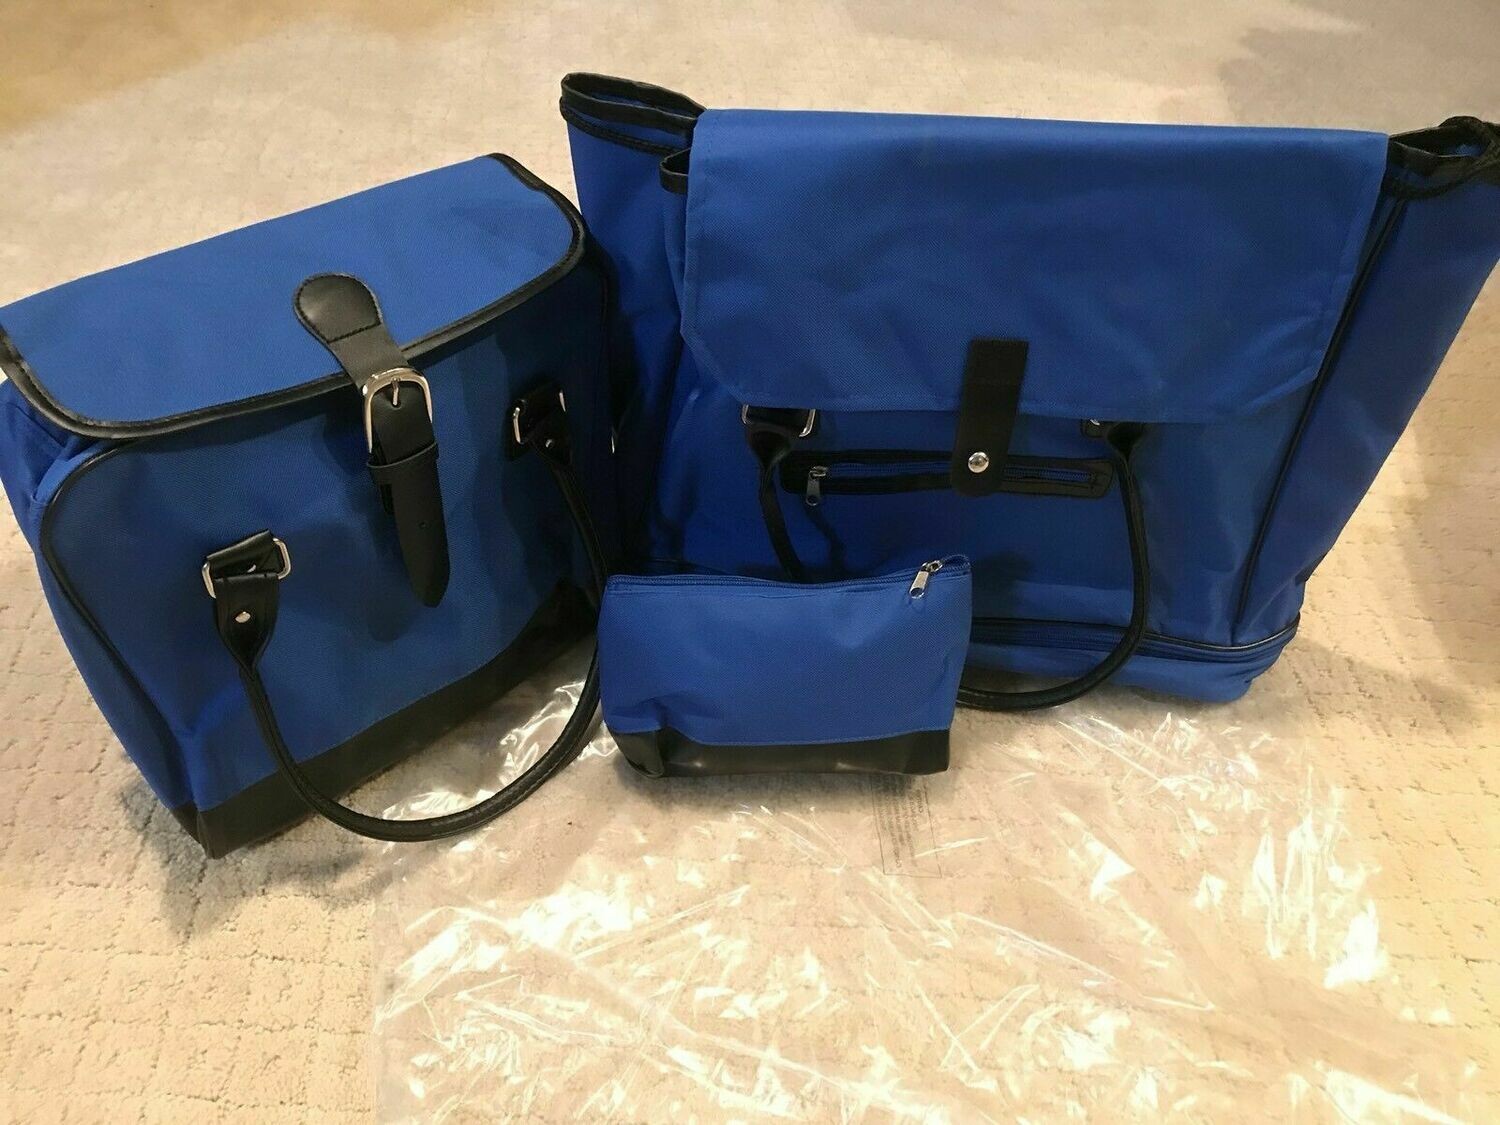 3 Pc Carry On Bag Set Royal Blue.